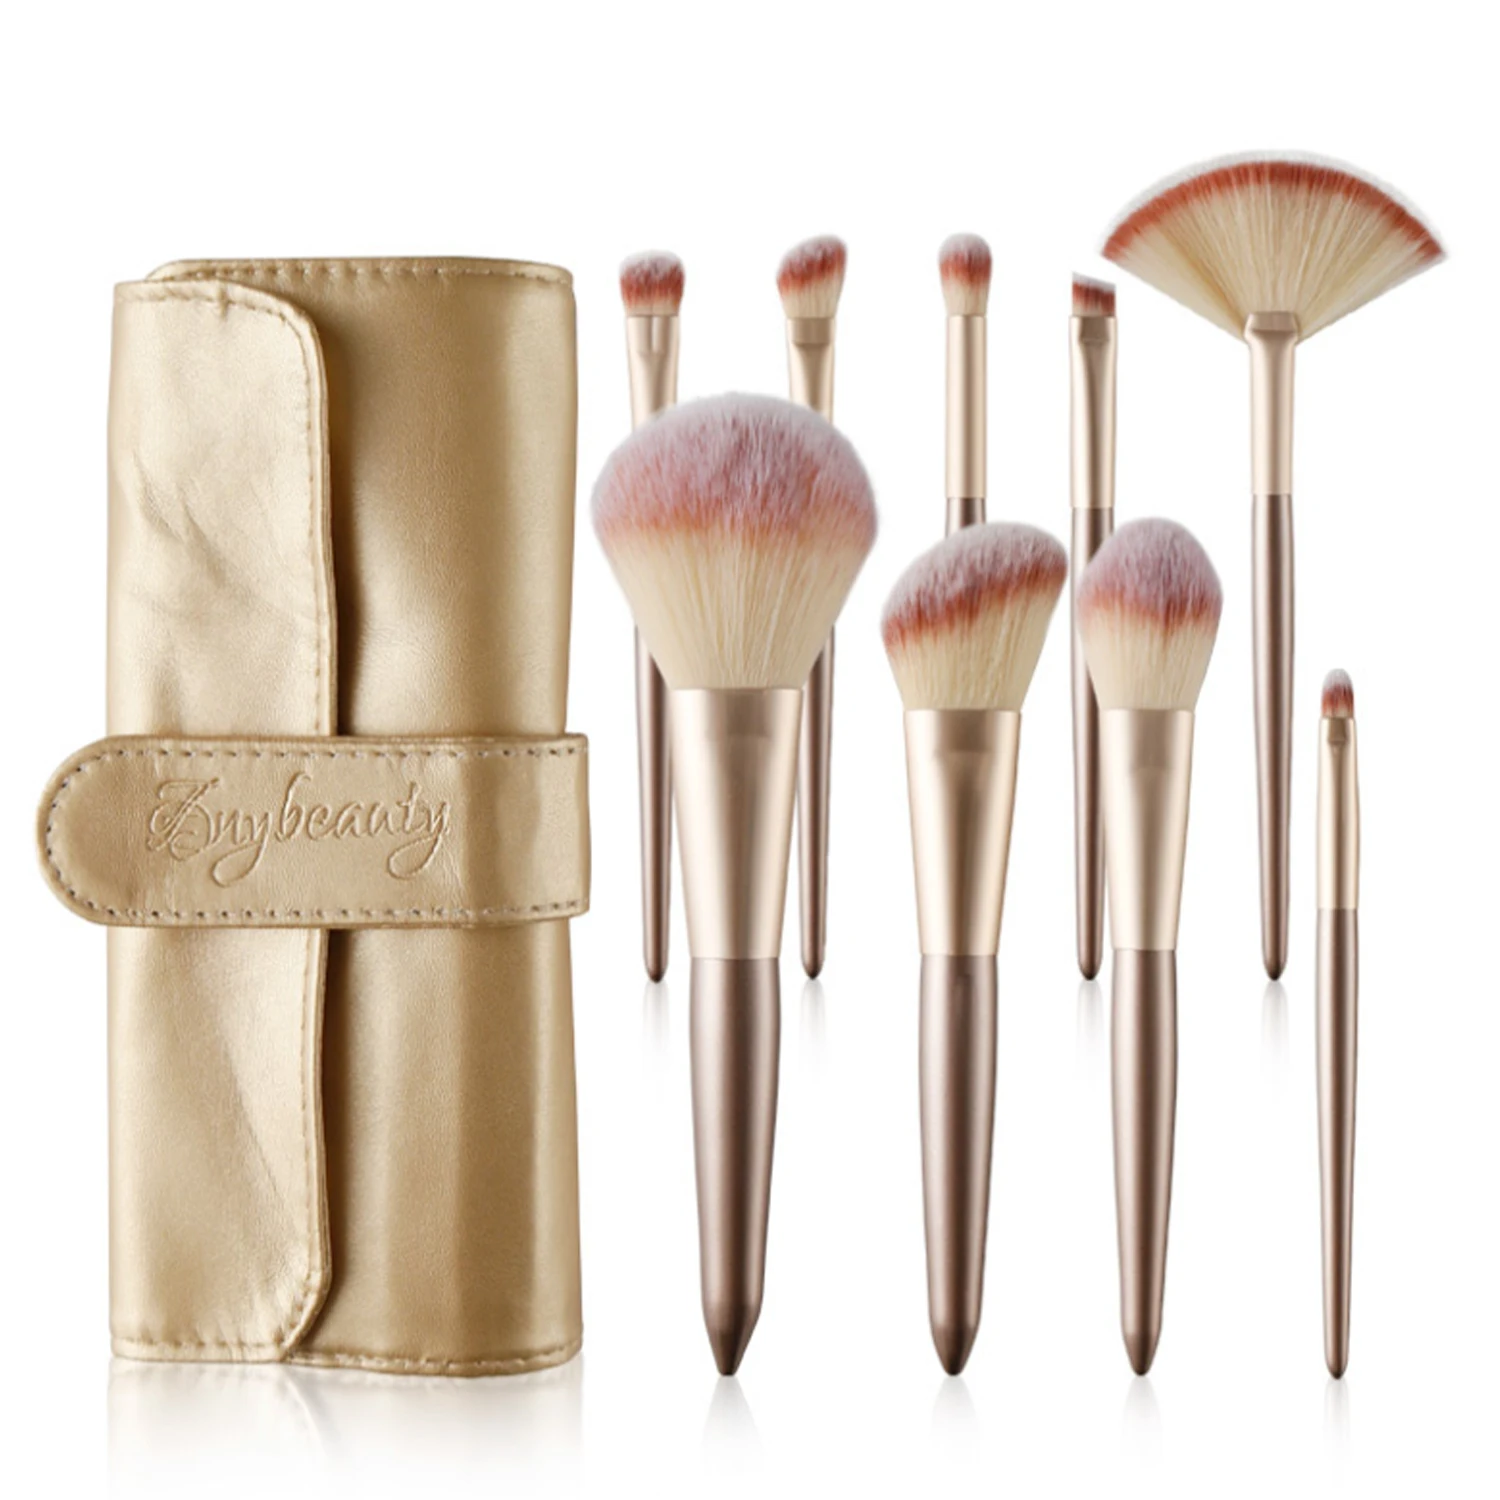 9Pcs Champagne Makeup Brushes Set for Cosmetic Foundation Powder Blush Eyeshadow Kabuki Blending Make Up Brush Beauty Tool